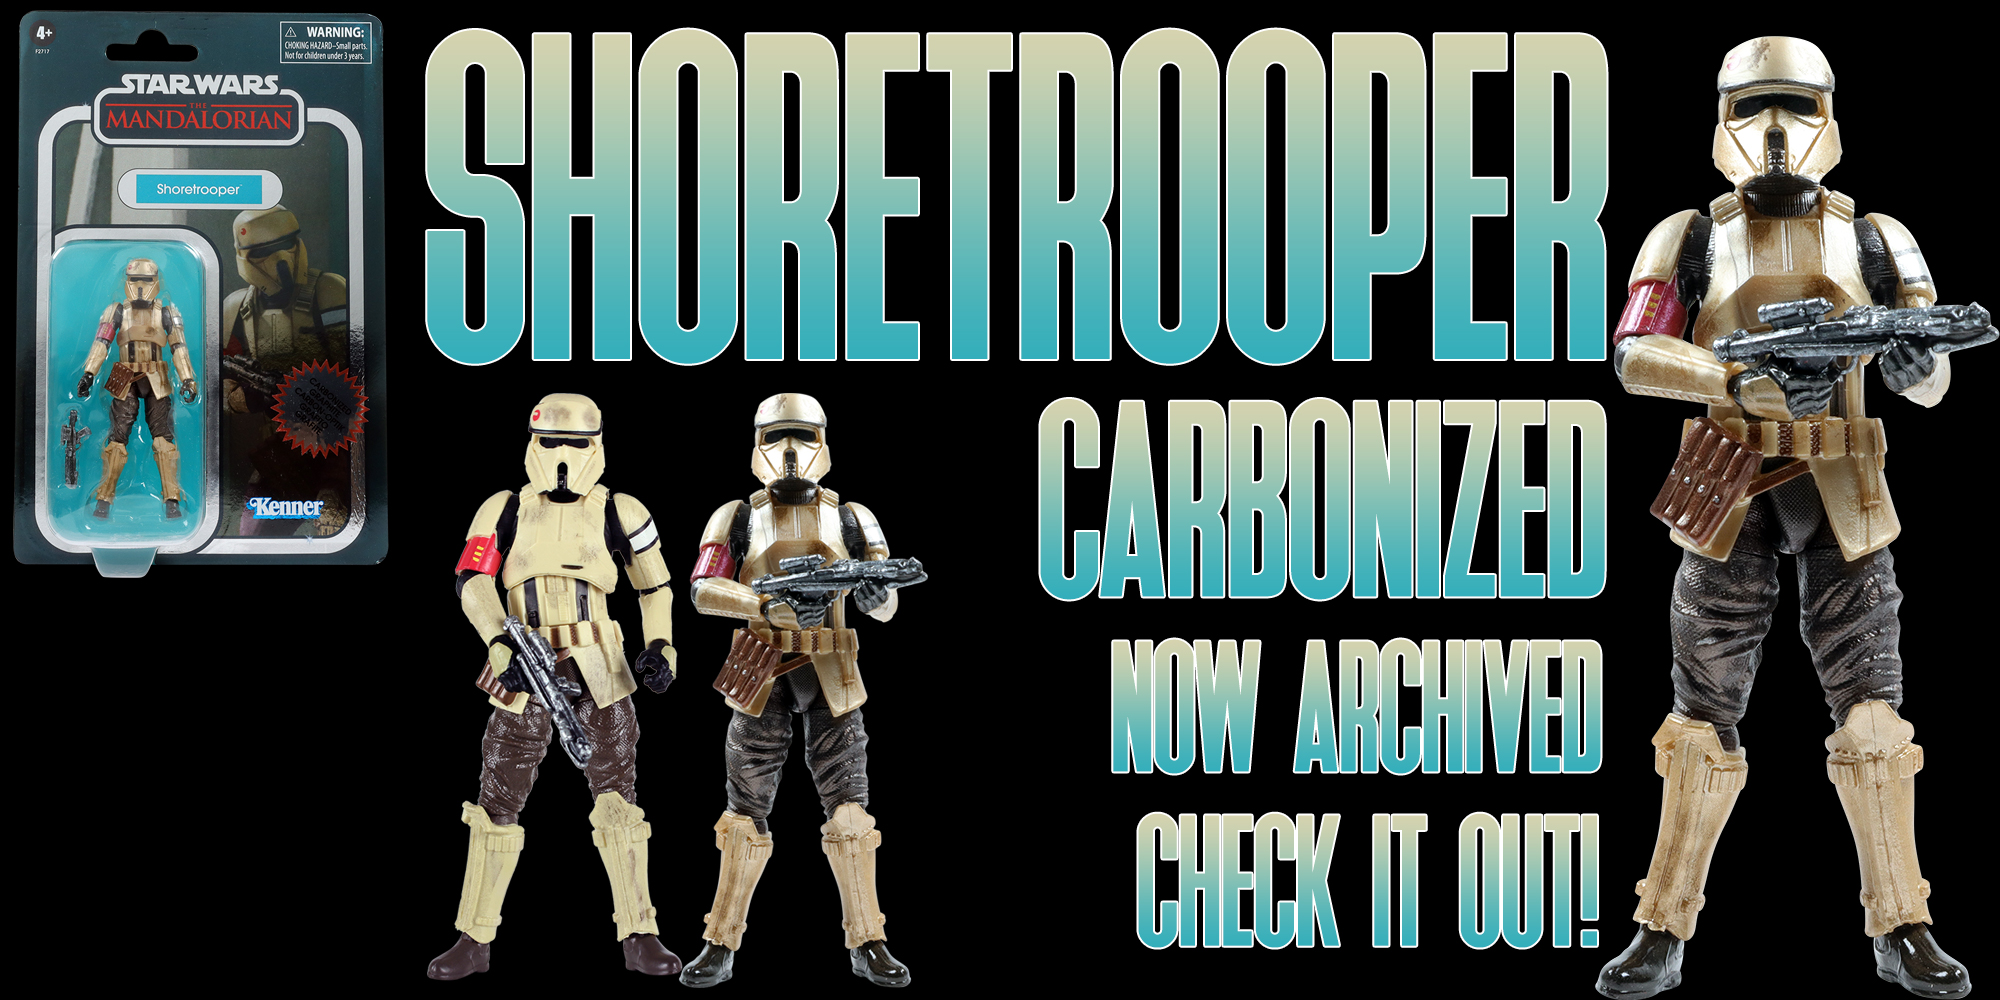 Shoretrooper Carbonized Added